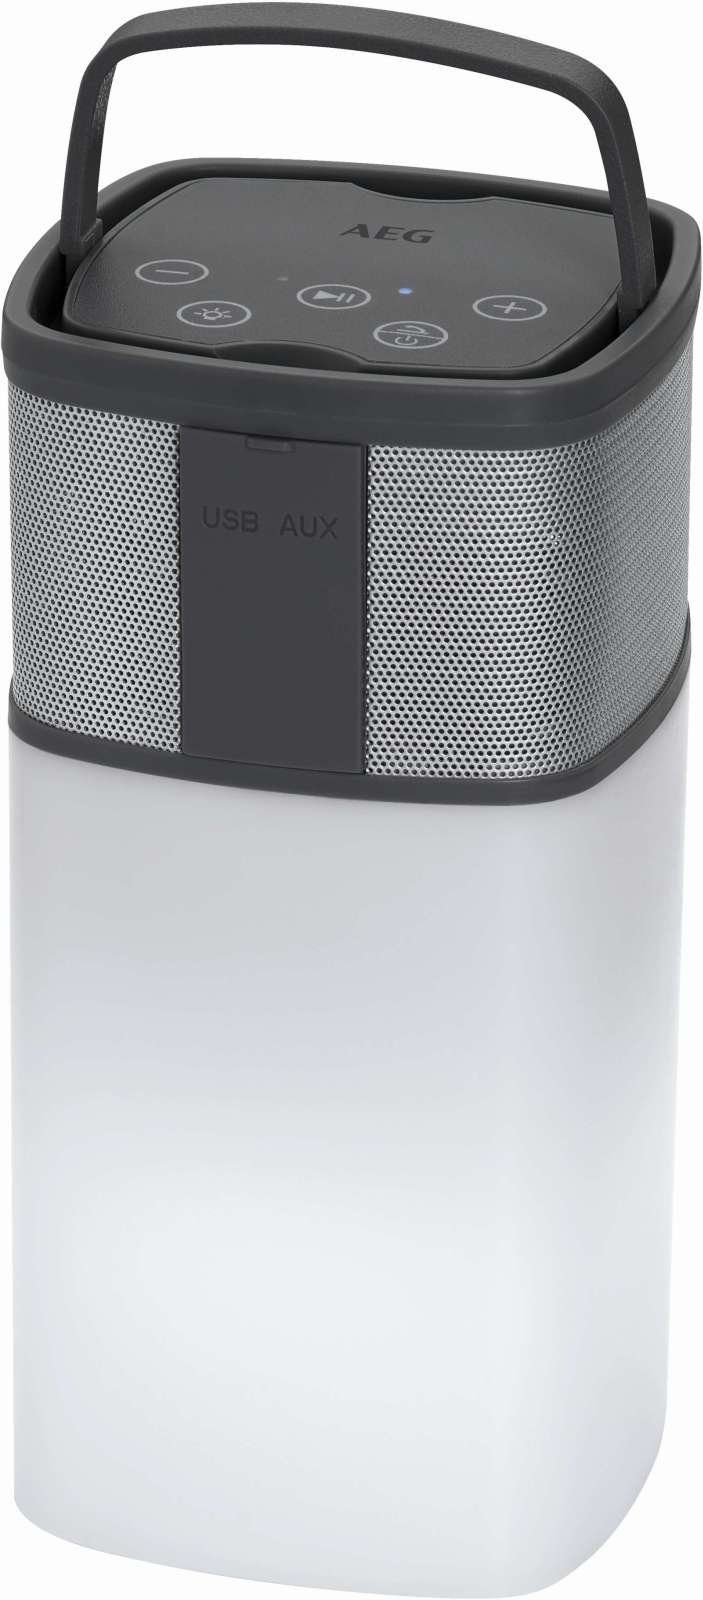 AEG AEG Bluetooth-Lautsprecher Soundsystem Powerbank BSS 4841 weiß Lautsprecher | Lautsprecher